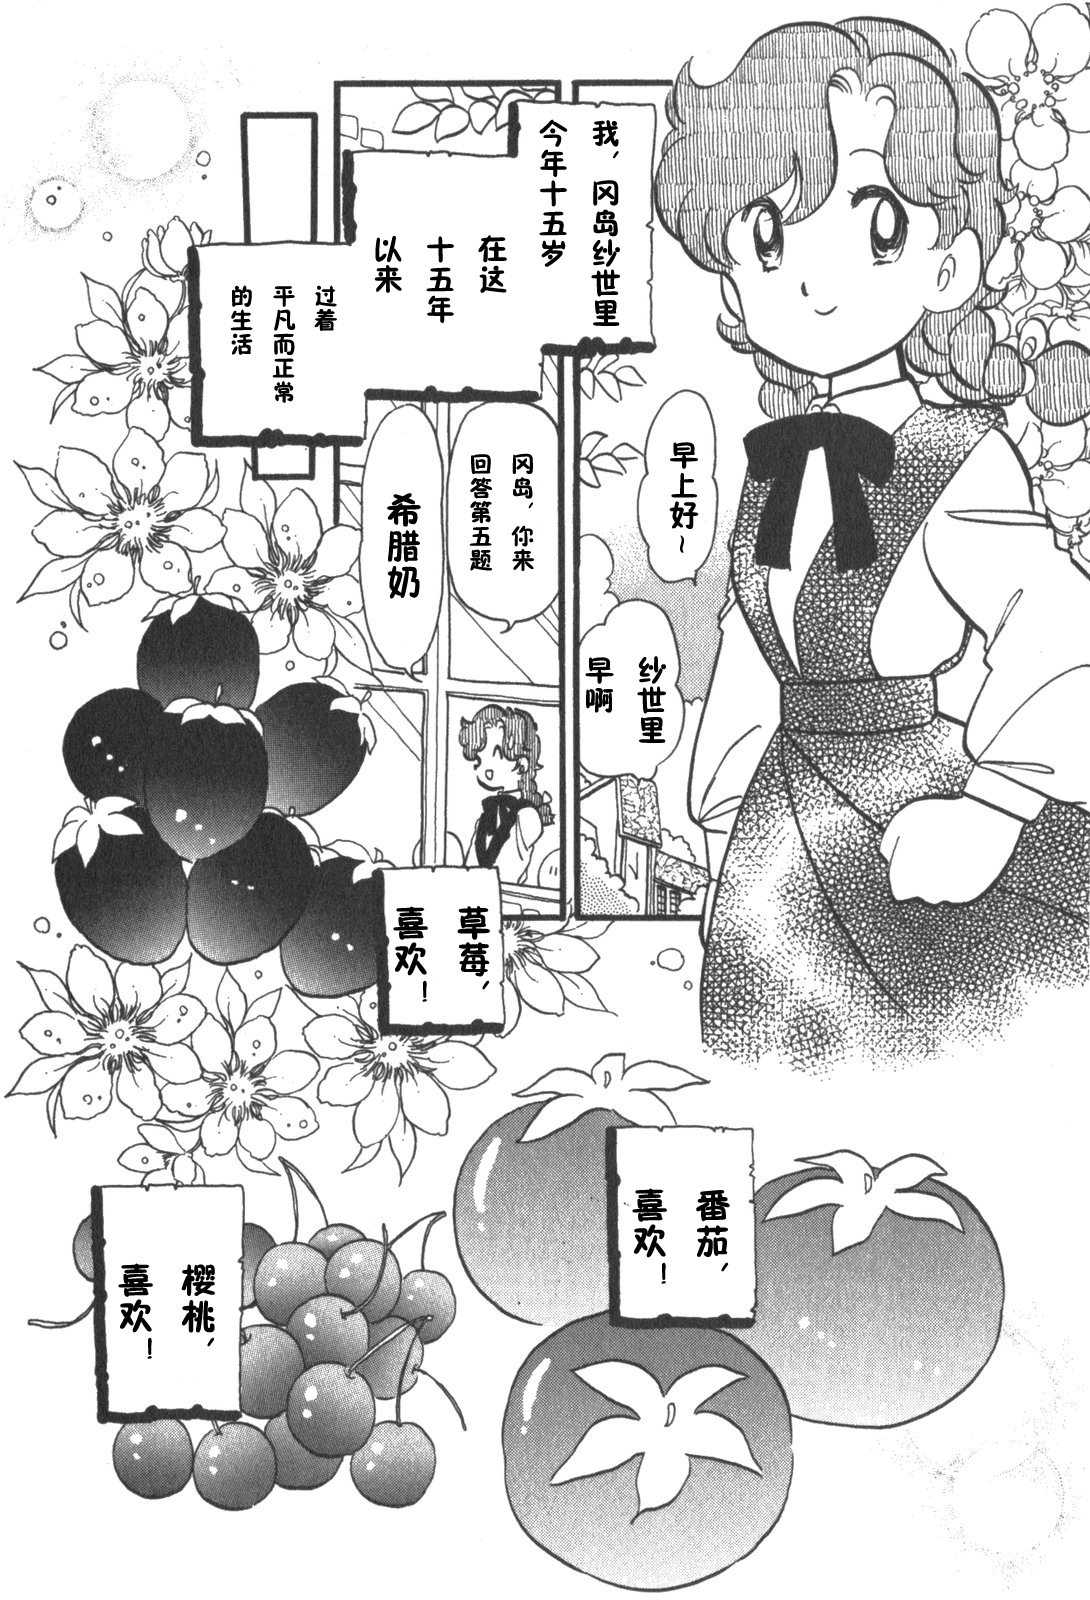 Fubuki, One-Punch Man, anime girls | 1079x1655 Wallpaper - wallhaven.cc